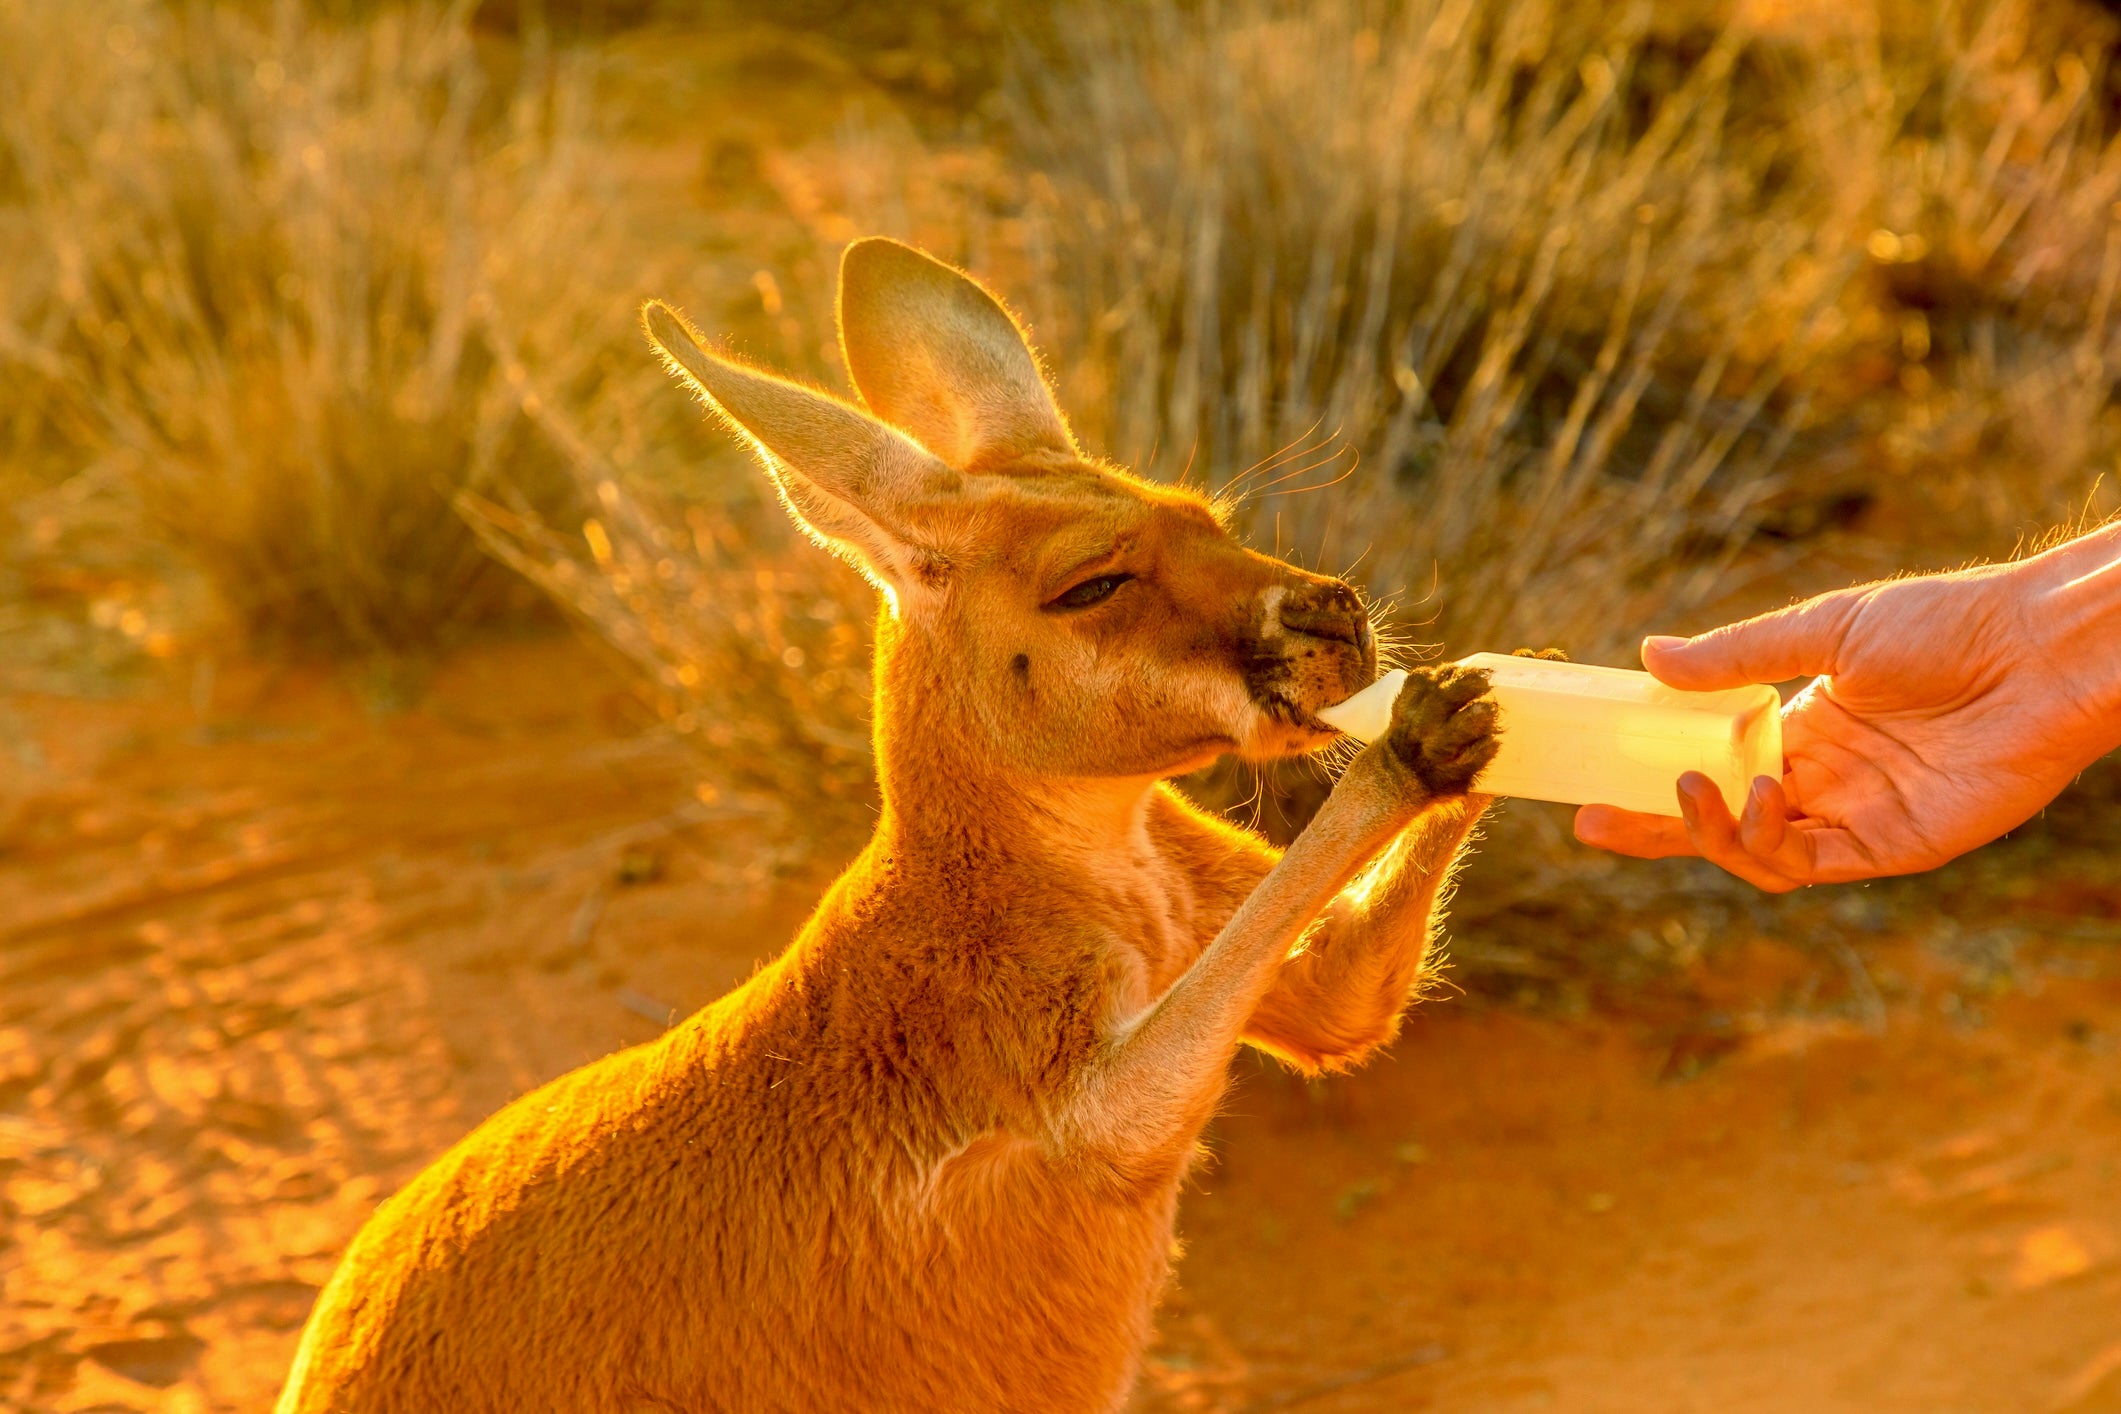 Kangaroo joey being fed Di-Vetelact Original Milk Supplement